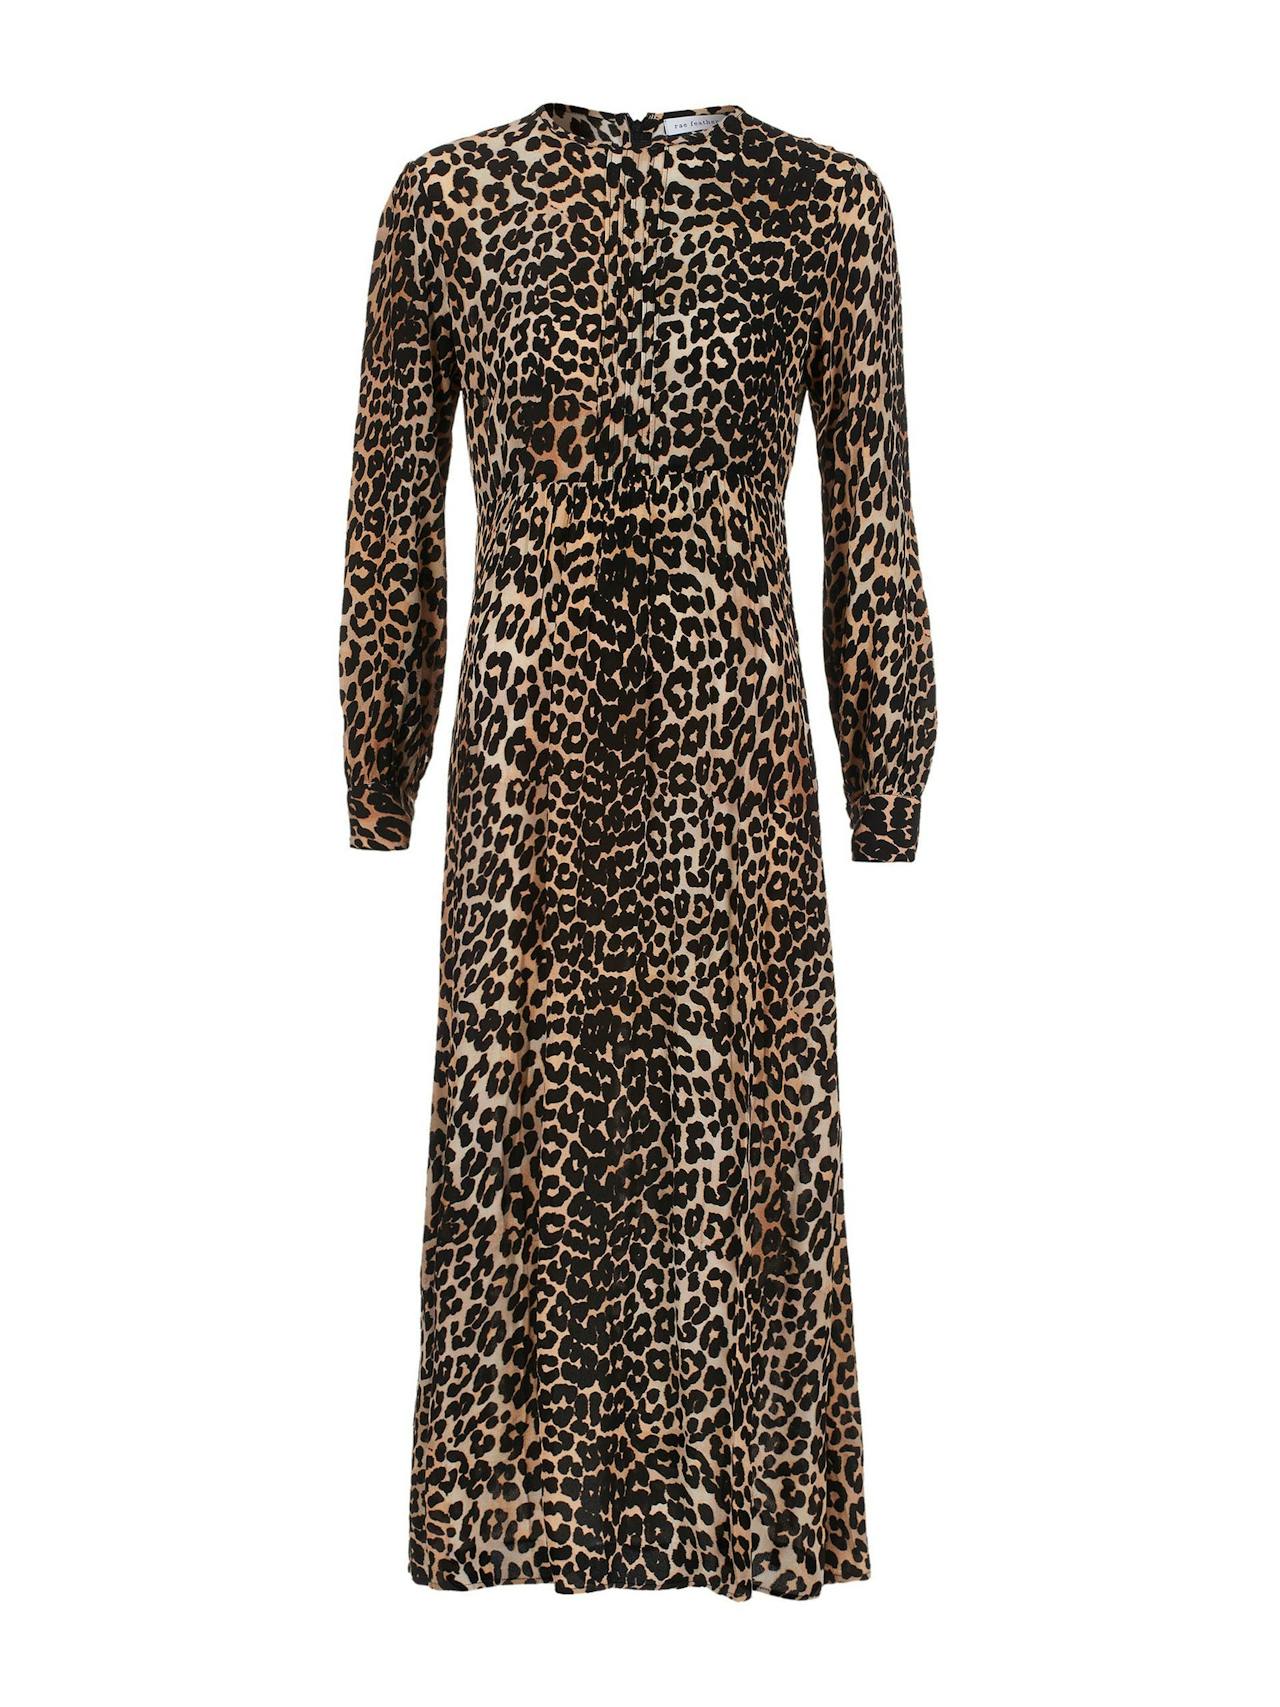 Leopard print heavyweight crepe pleat dress